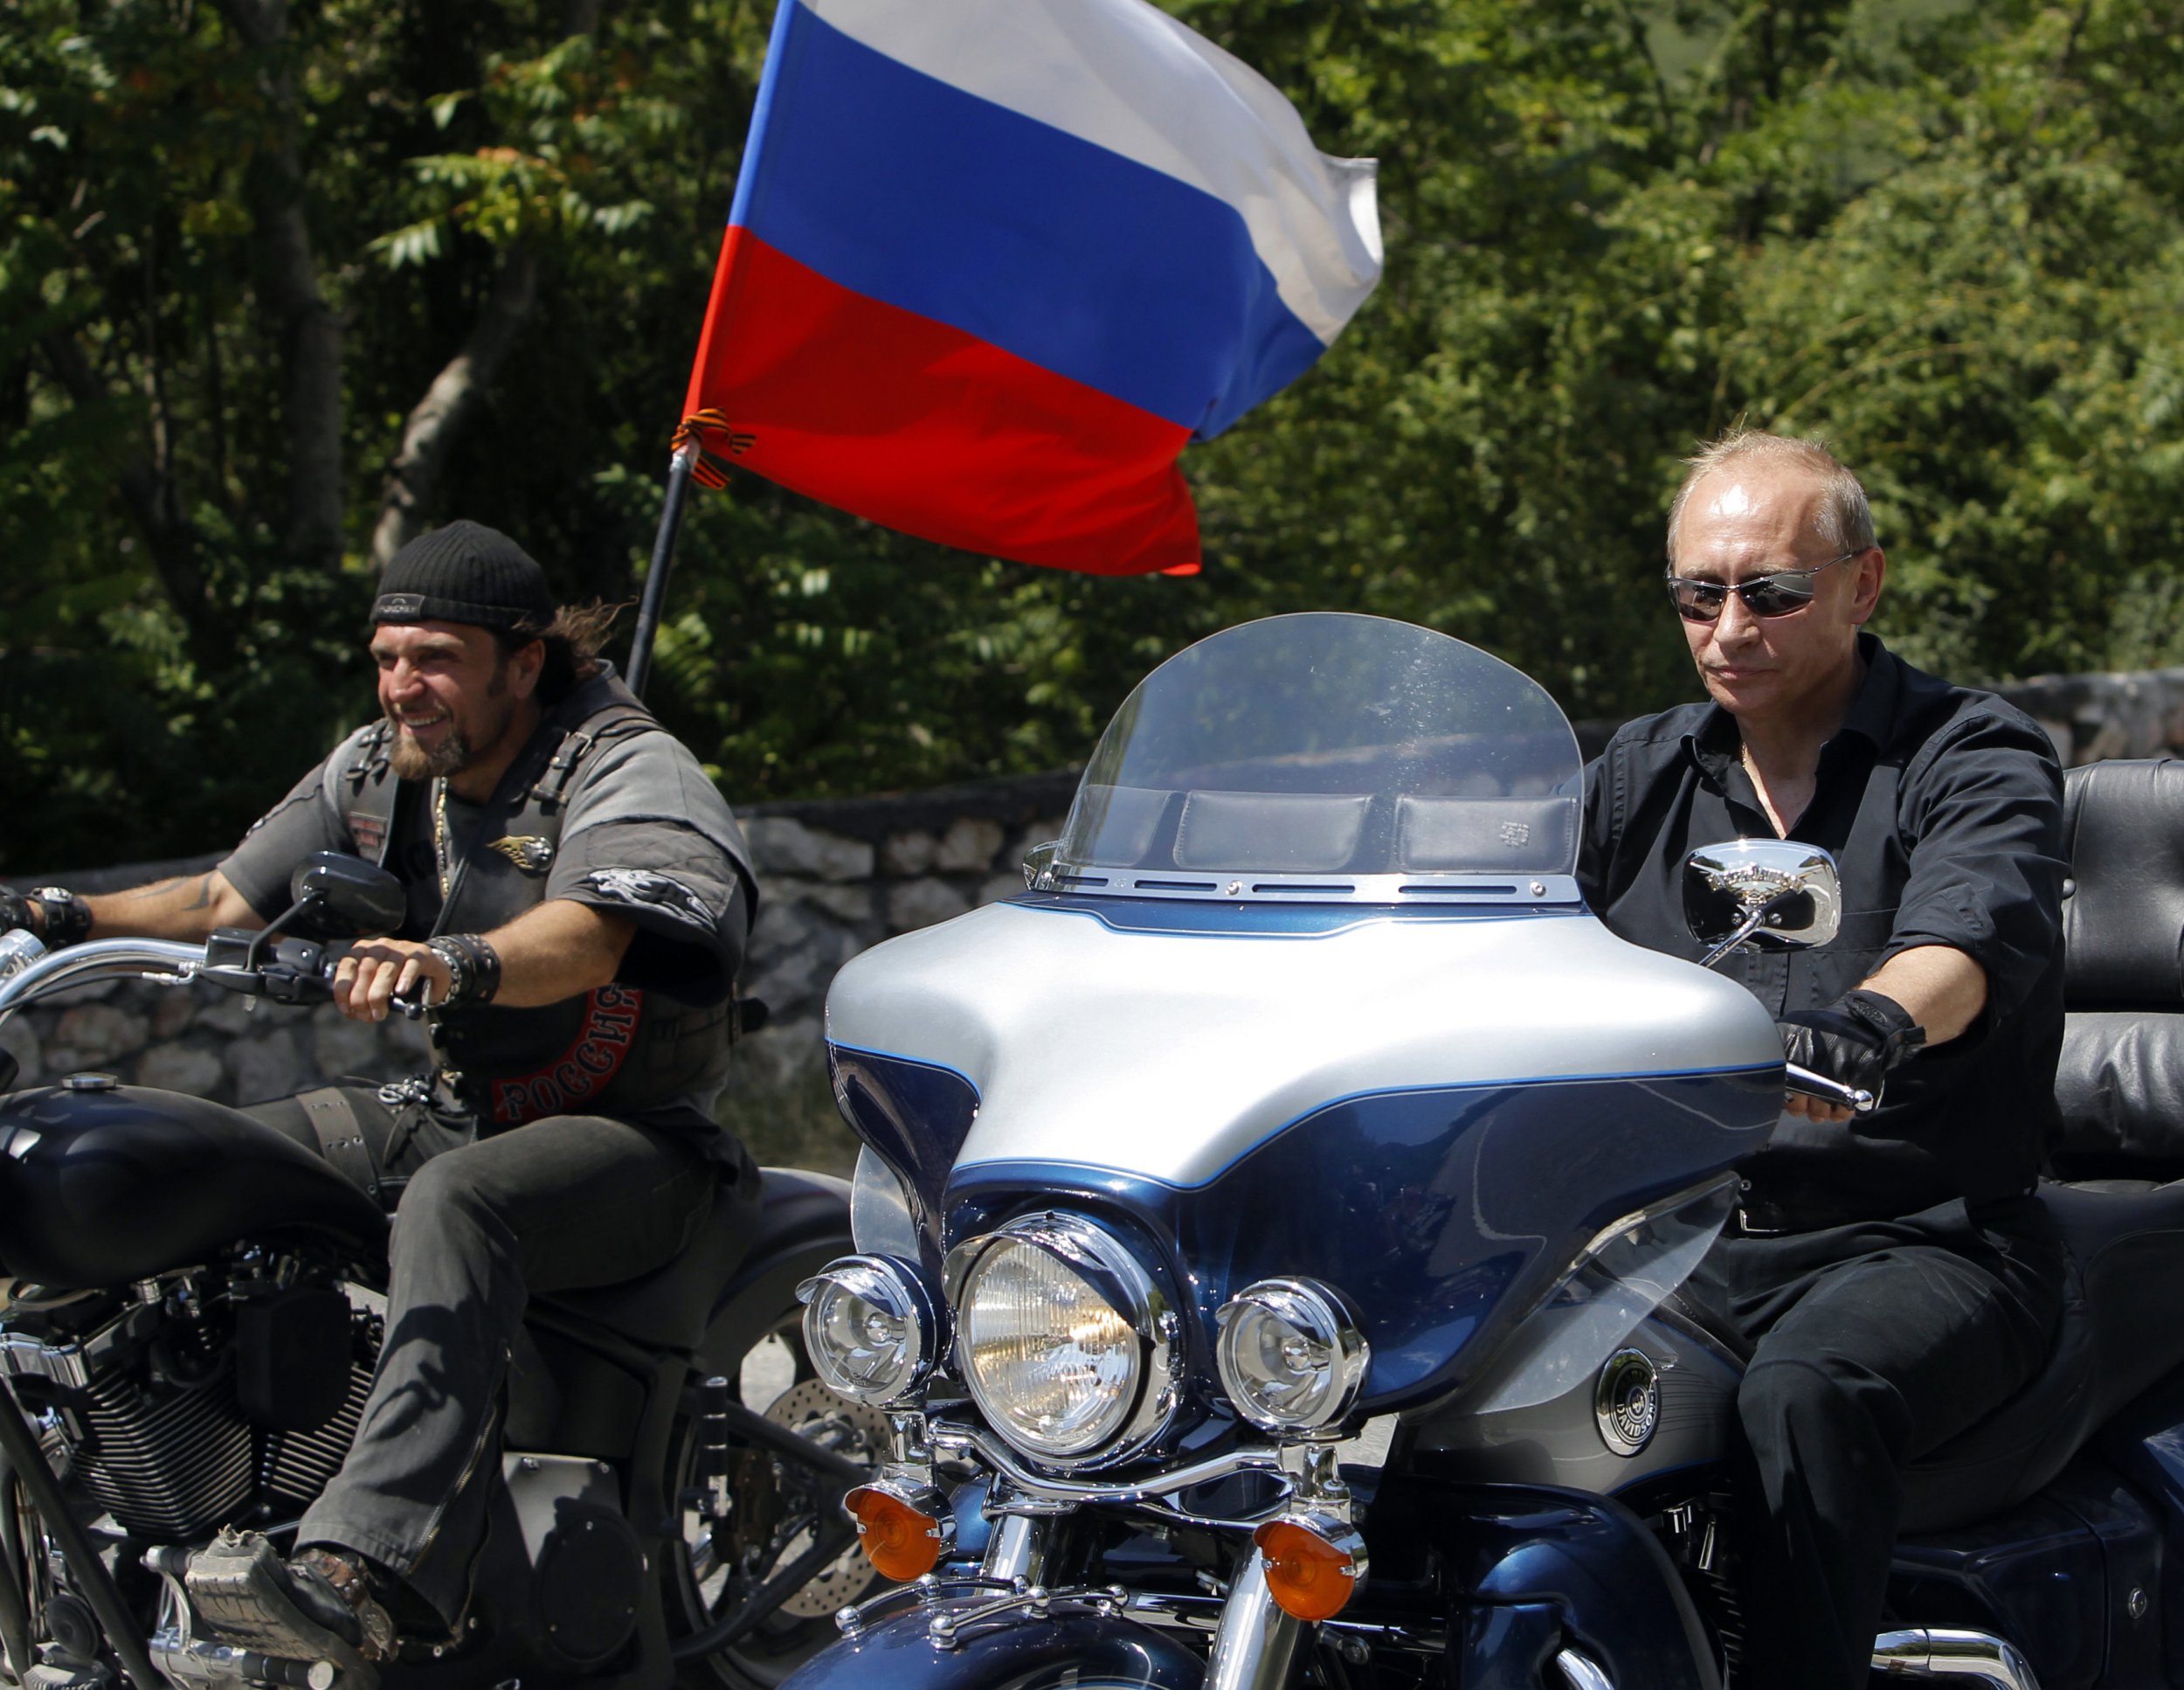 Putin on bike